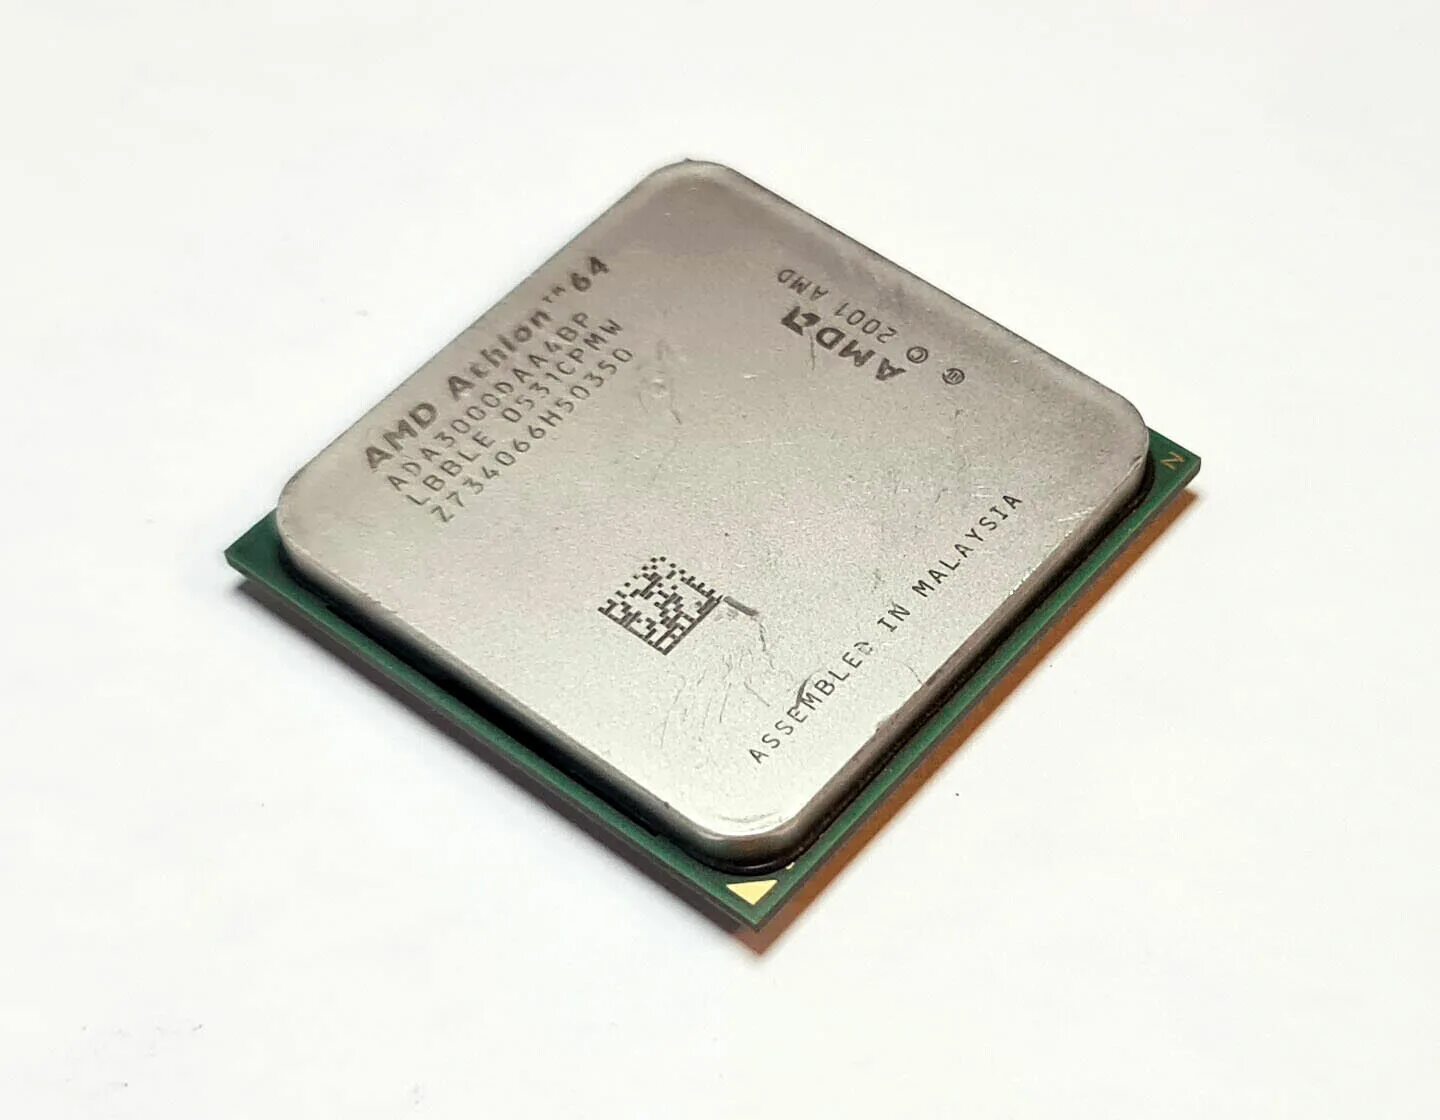 64 процессор купить. Процессор AMD Athlon 64 Socket 939. AMD Athlon 64 x2 5200+. Athlon 64 3000+ ada3000aep4ax. AMD Athlon 64 3000+ 1.8GHZ.